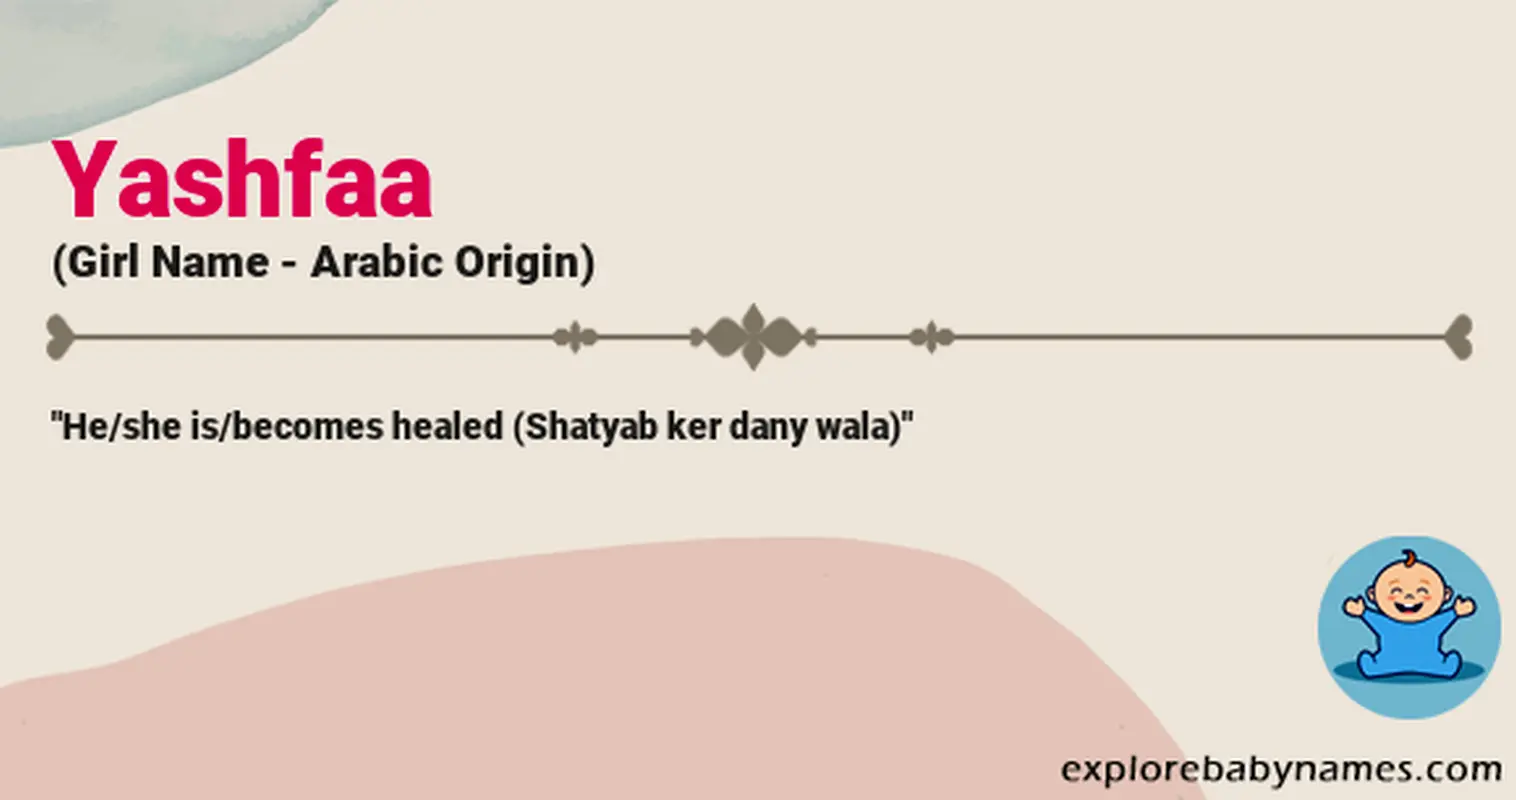 Meaning of Yashfaa